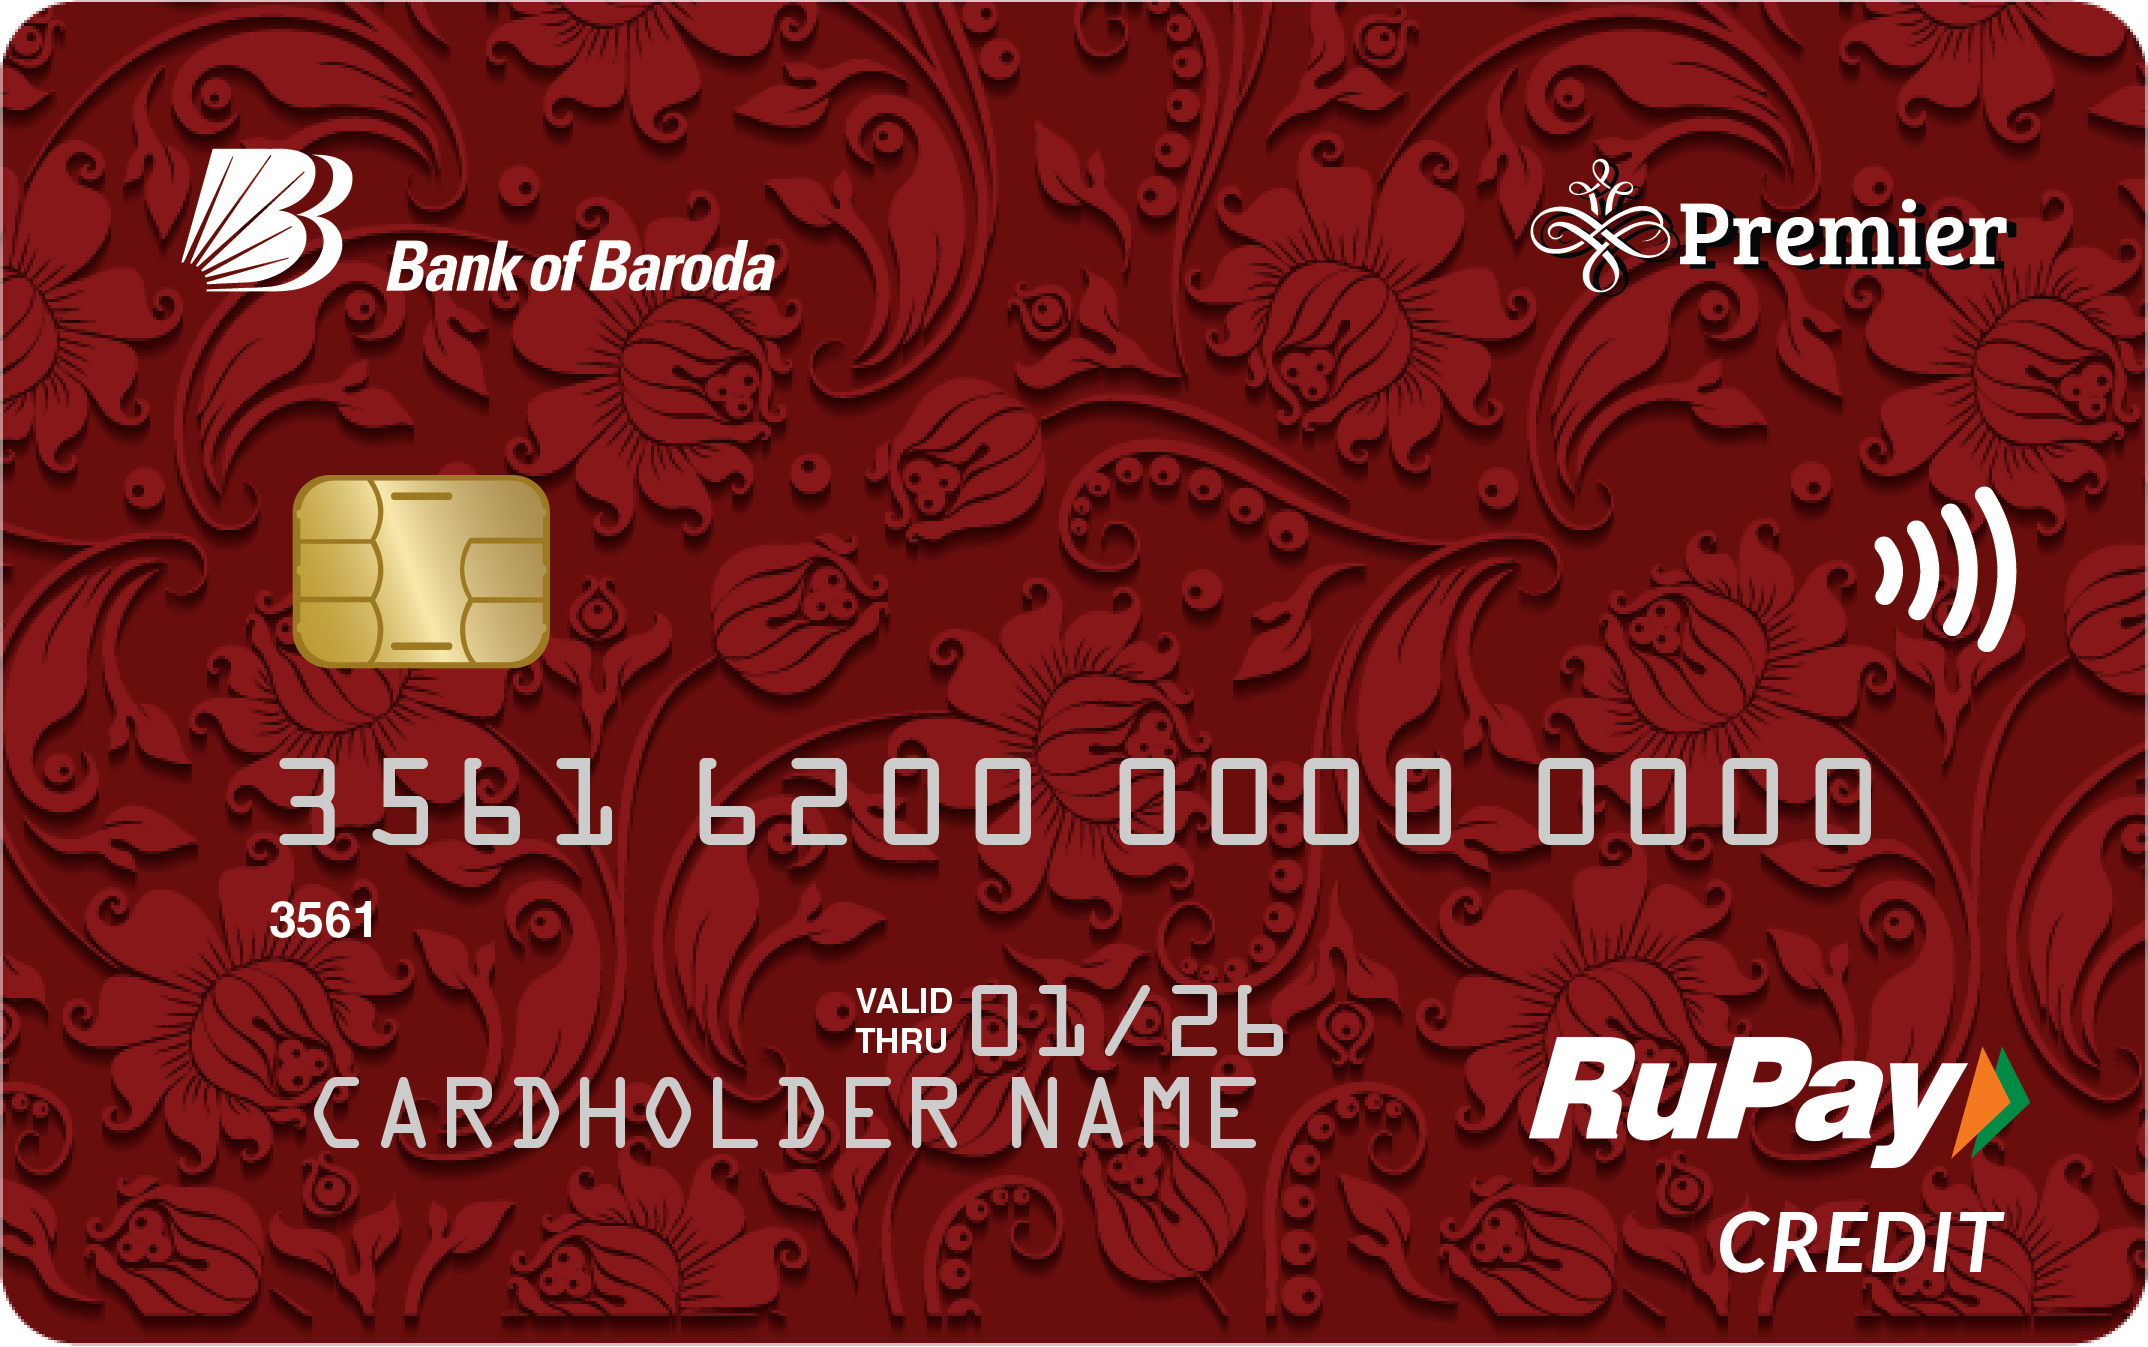 Bank-of-Baroda-Premier-Rupay-Credit-Card---Feature